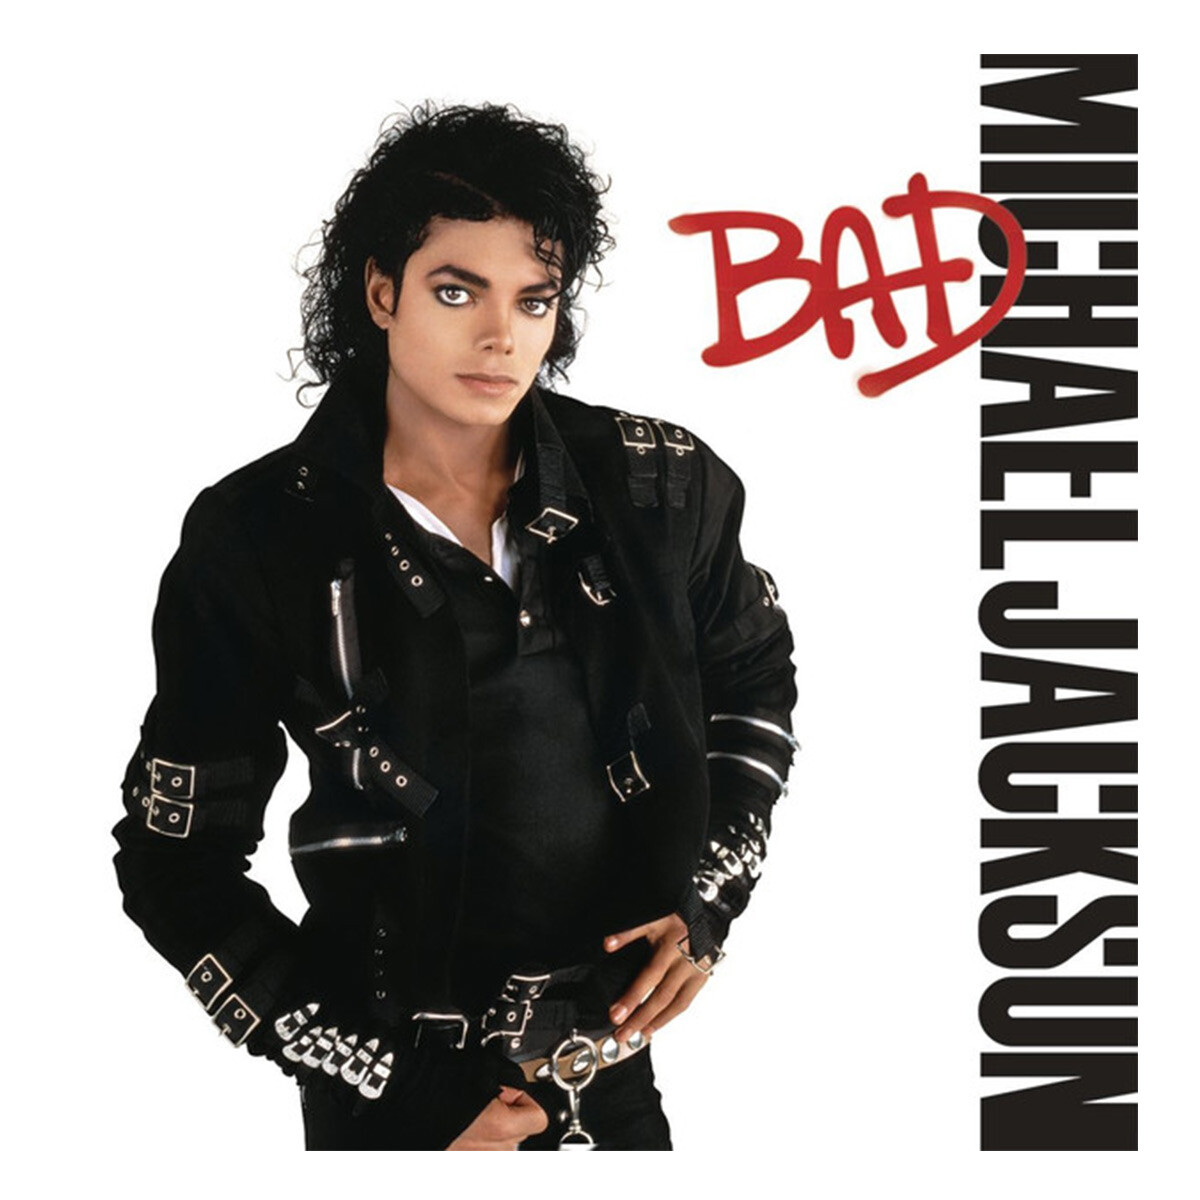 Vinilo decorativo Michael Jackson - pegatina michael jackson - música